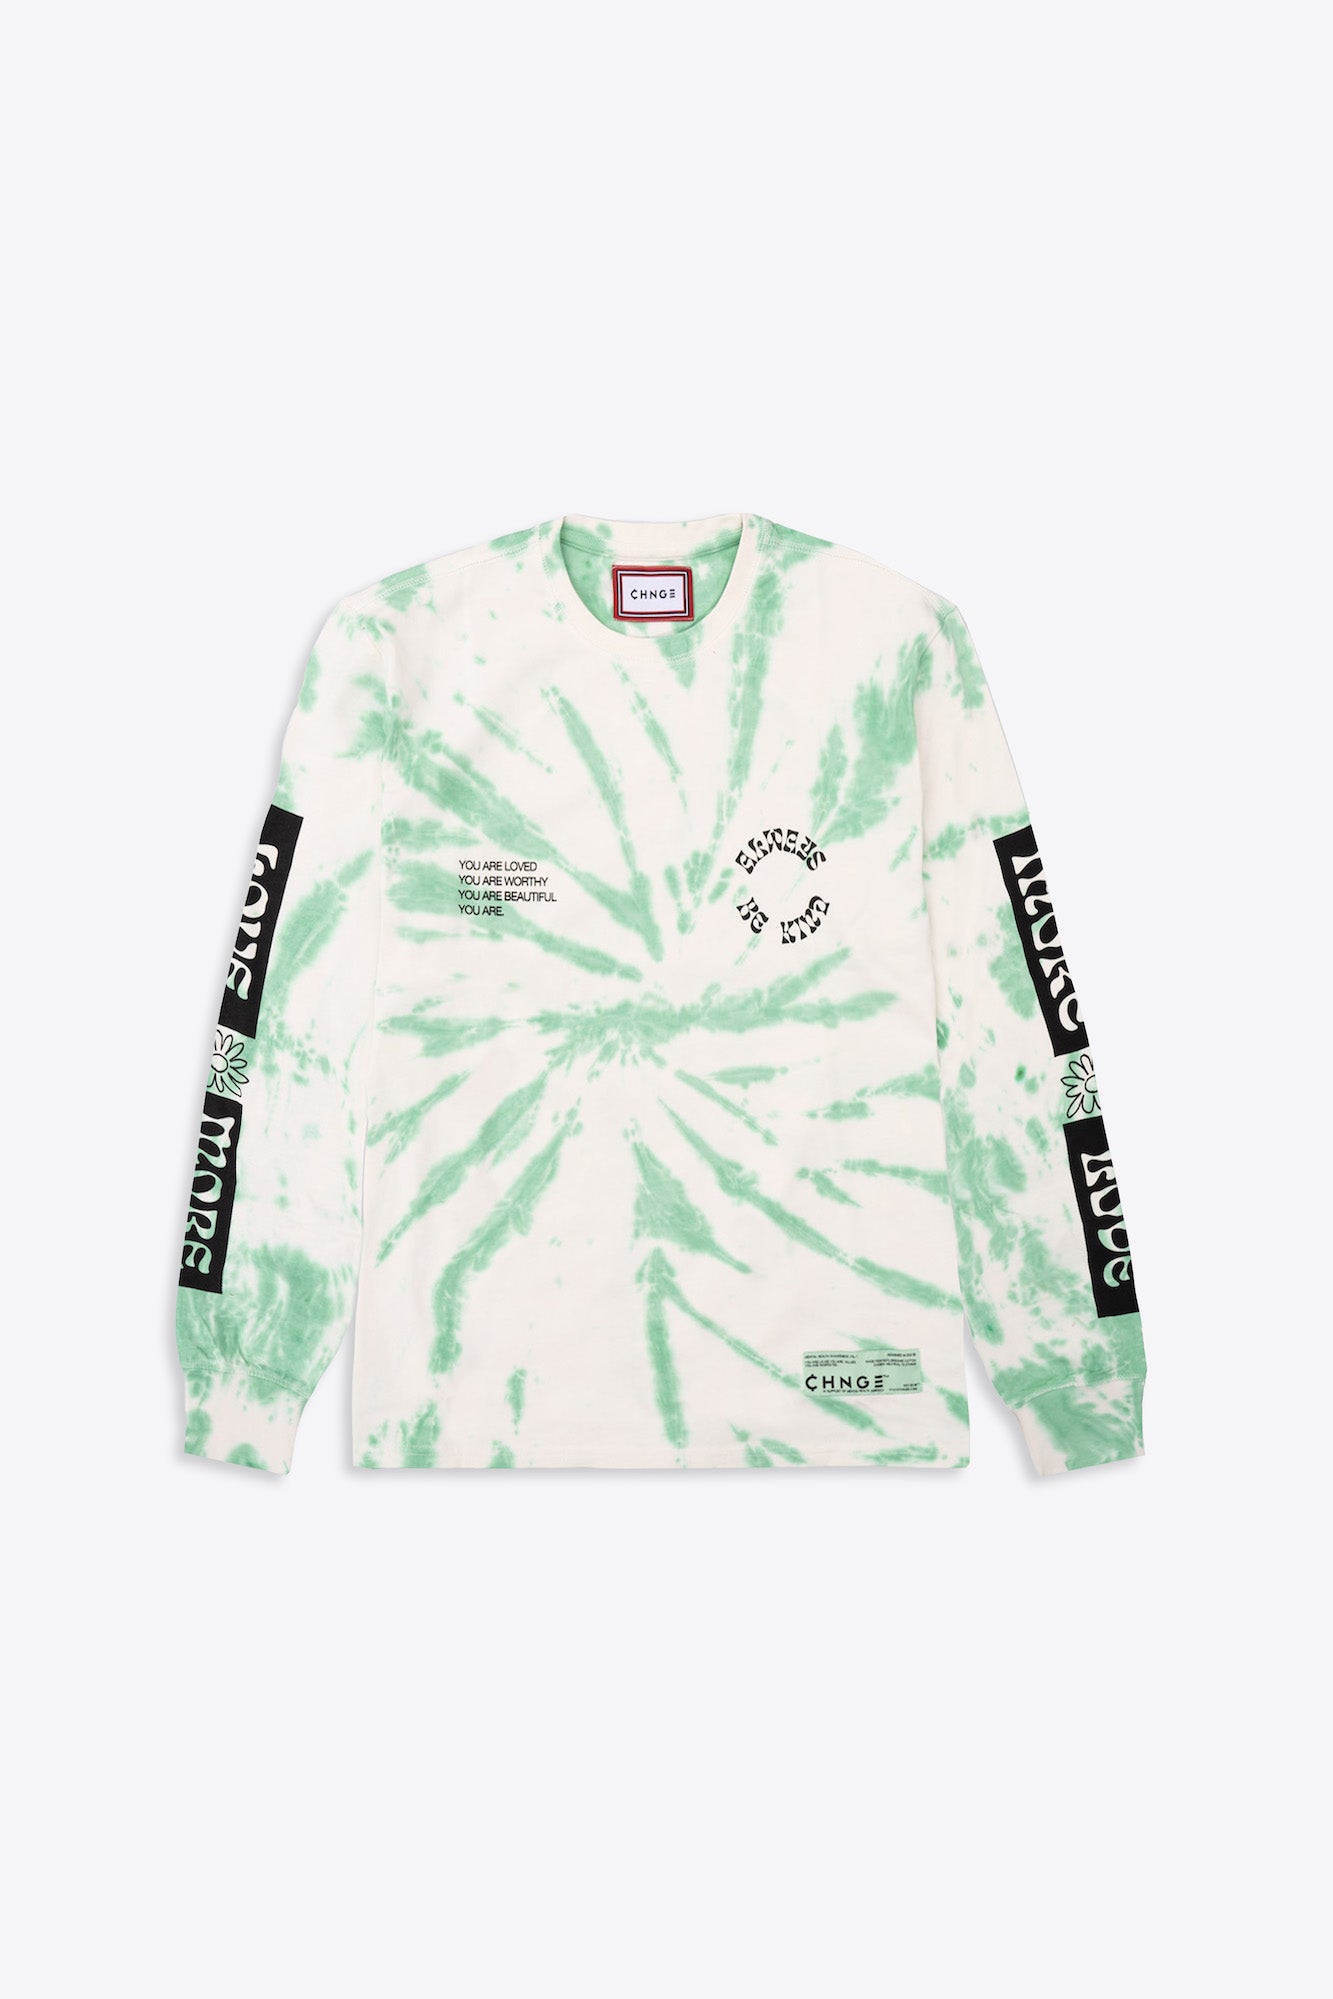 $47 More Cuffed Love TD) Spiral (Green T-Shirt L/S